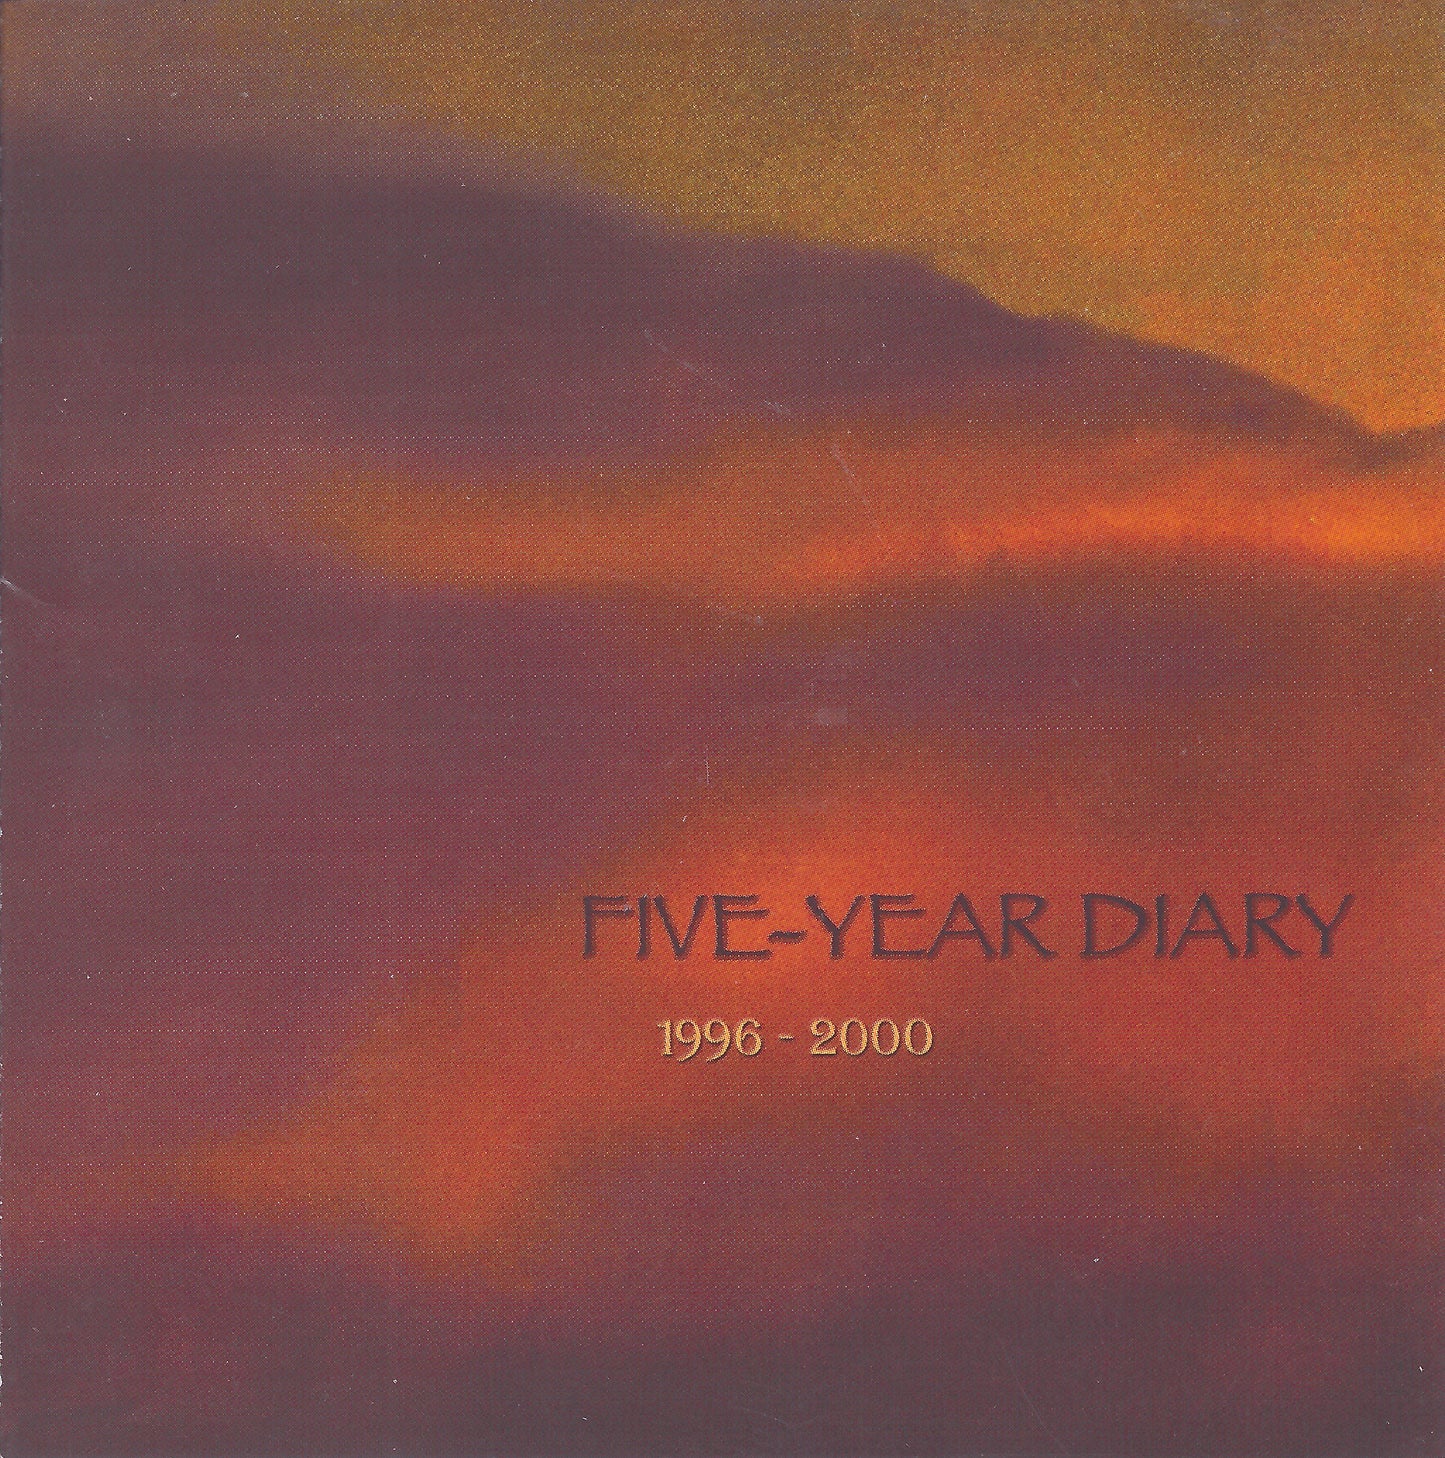 Chamberlain - Five Year Diary 1996-2000 Double Album